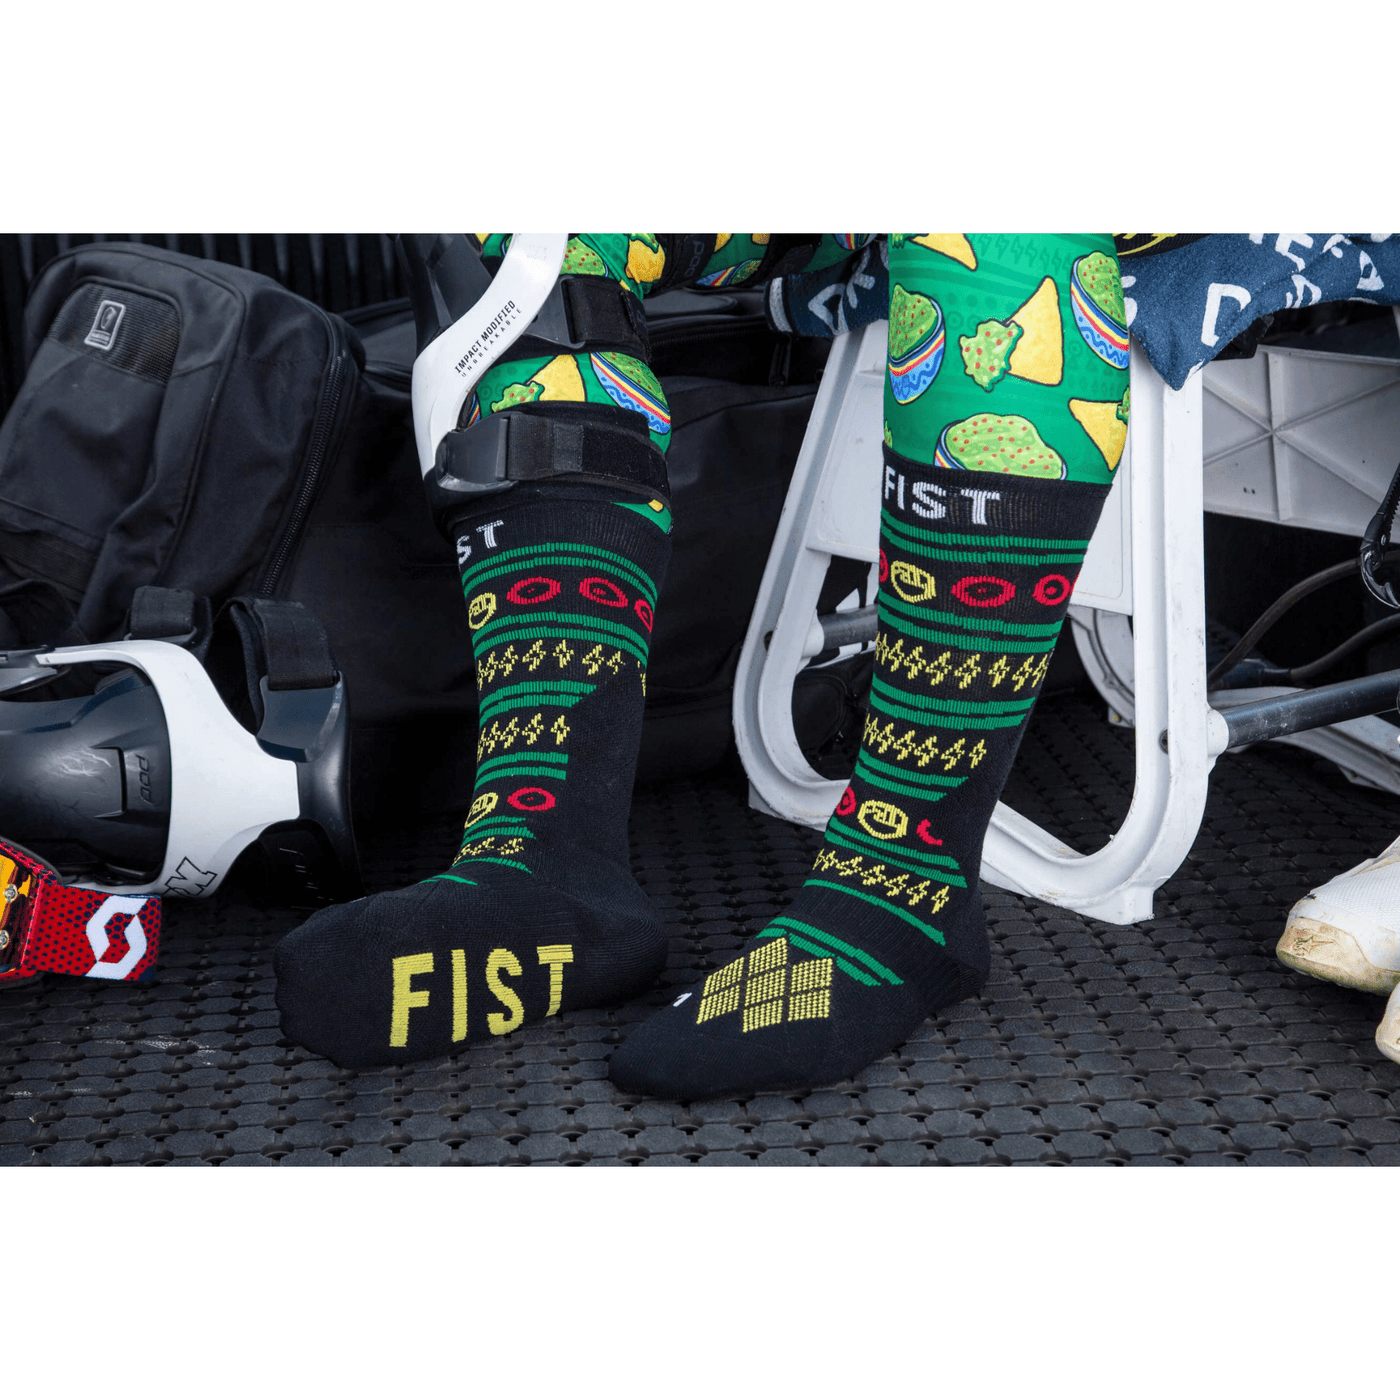 FIST Moto Socks - Chips n' Guac 8Lines Shop - Fast Shipping